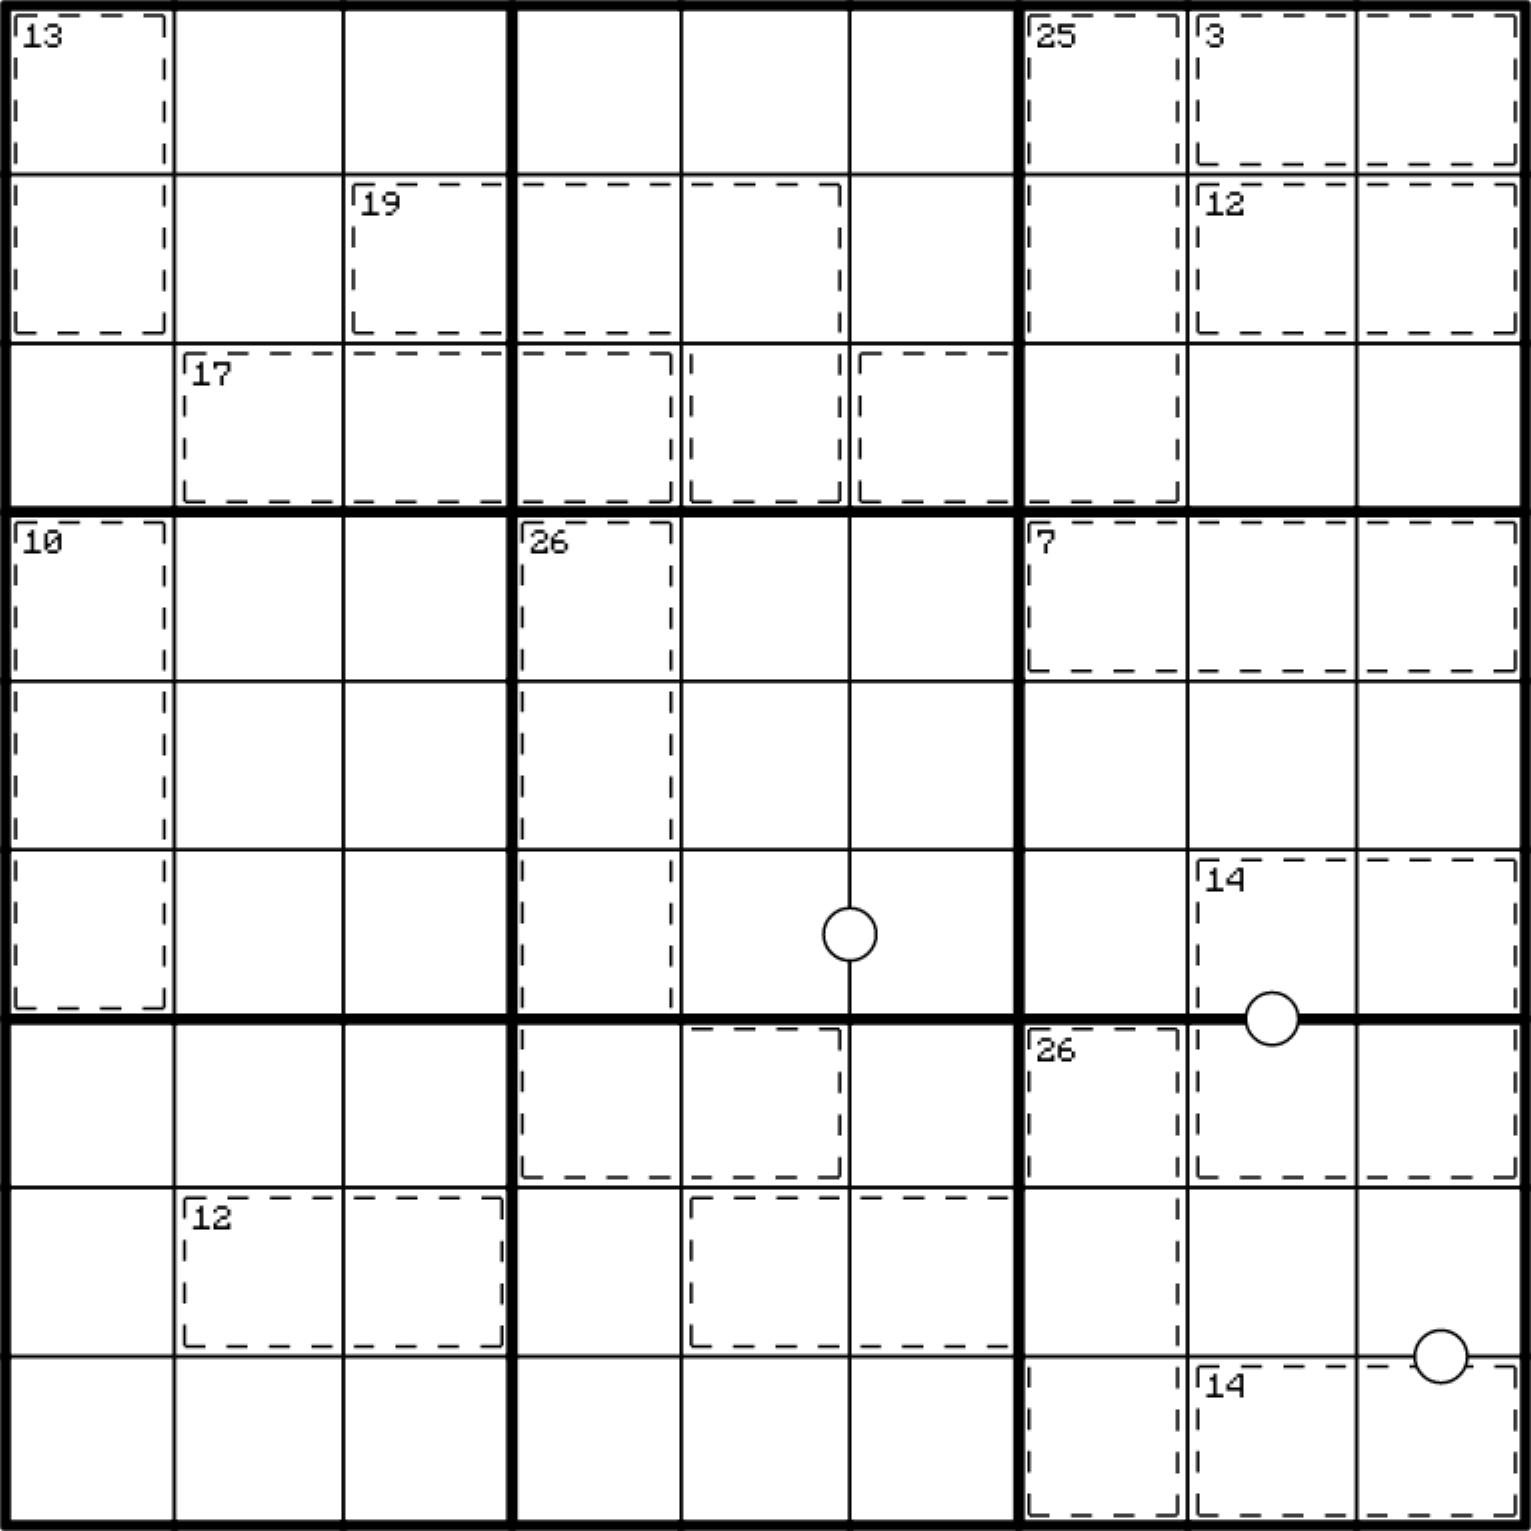 Image of 'Push' puzzle